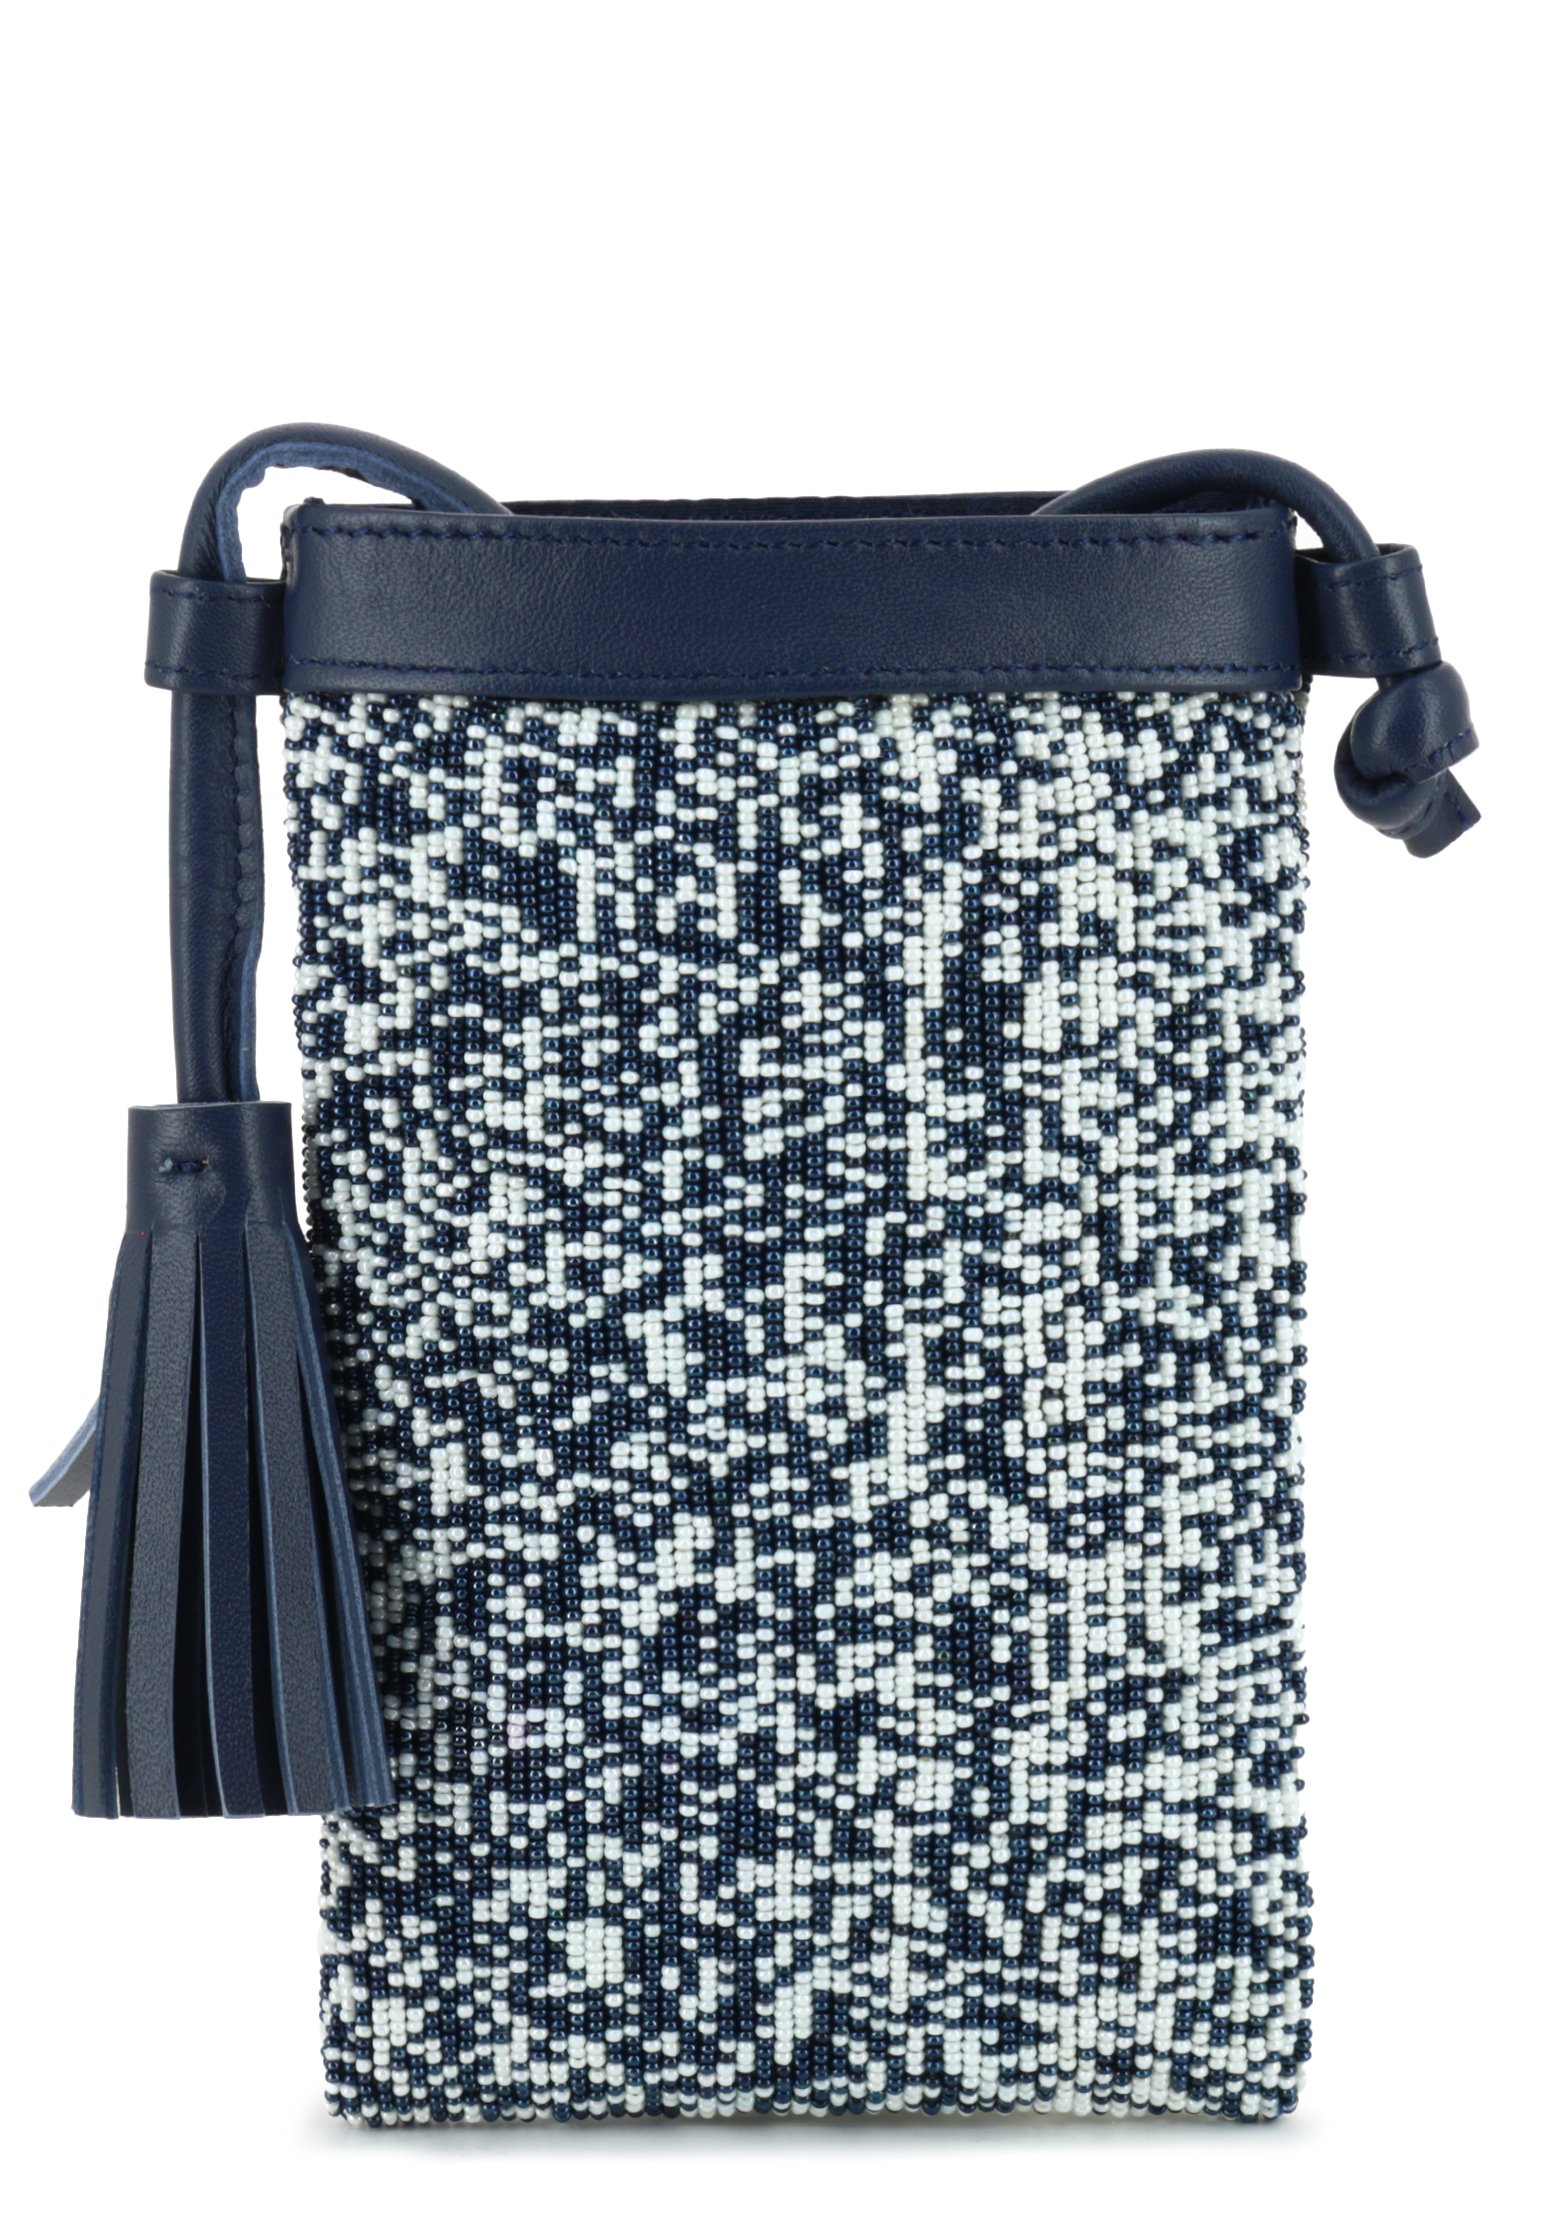 Bag DE SIENA Color: blue (Code: 2338) in online store Allure